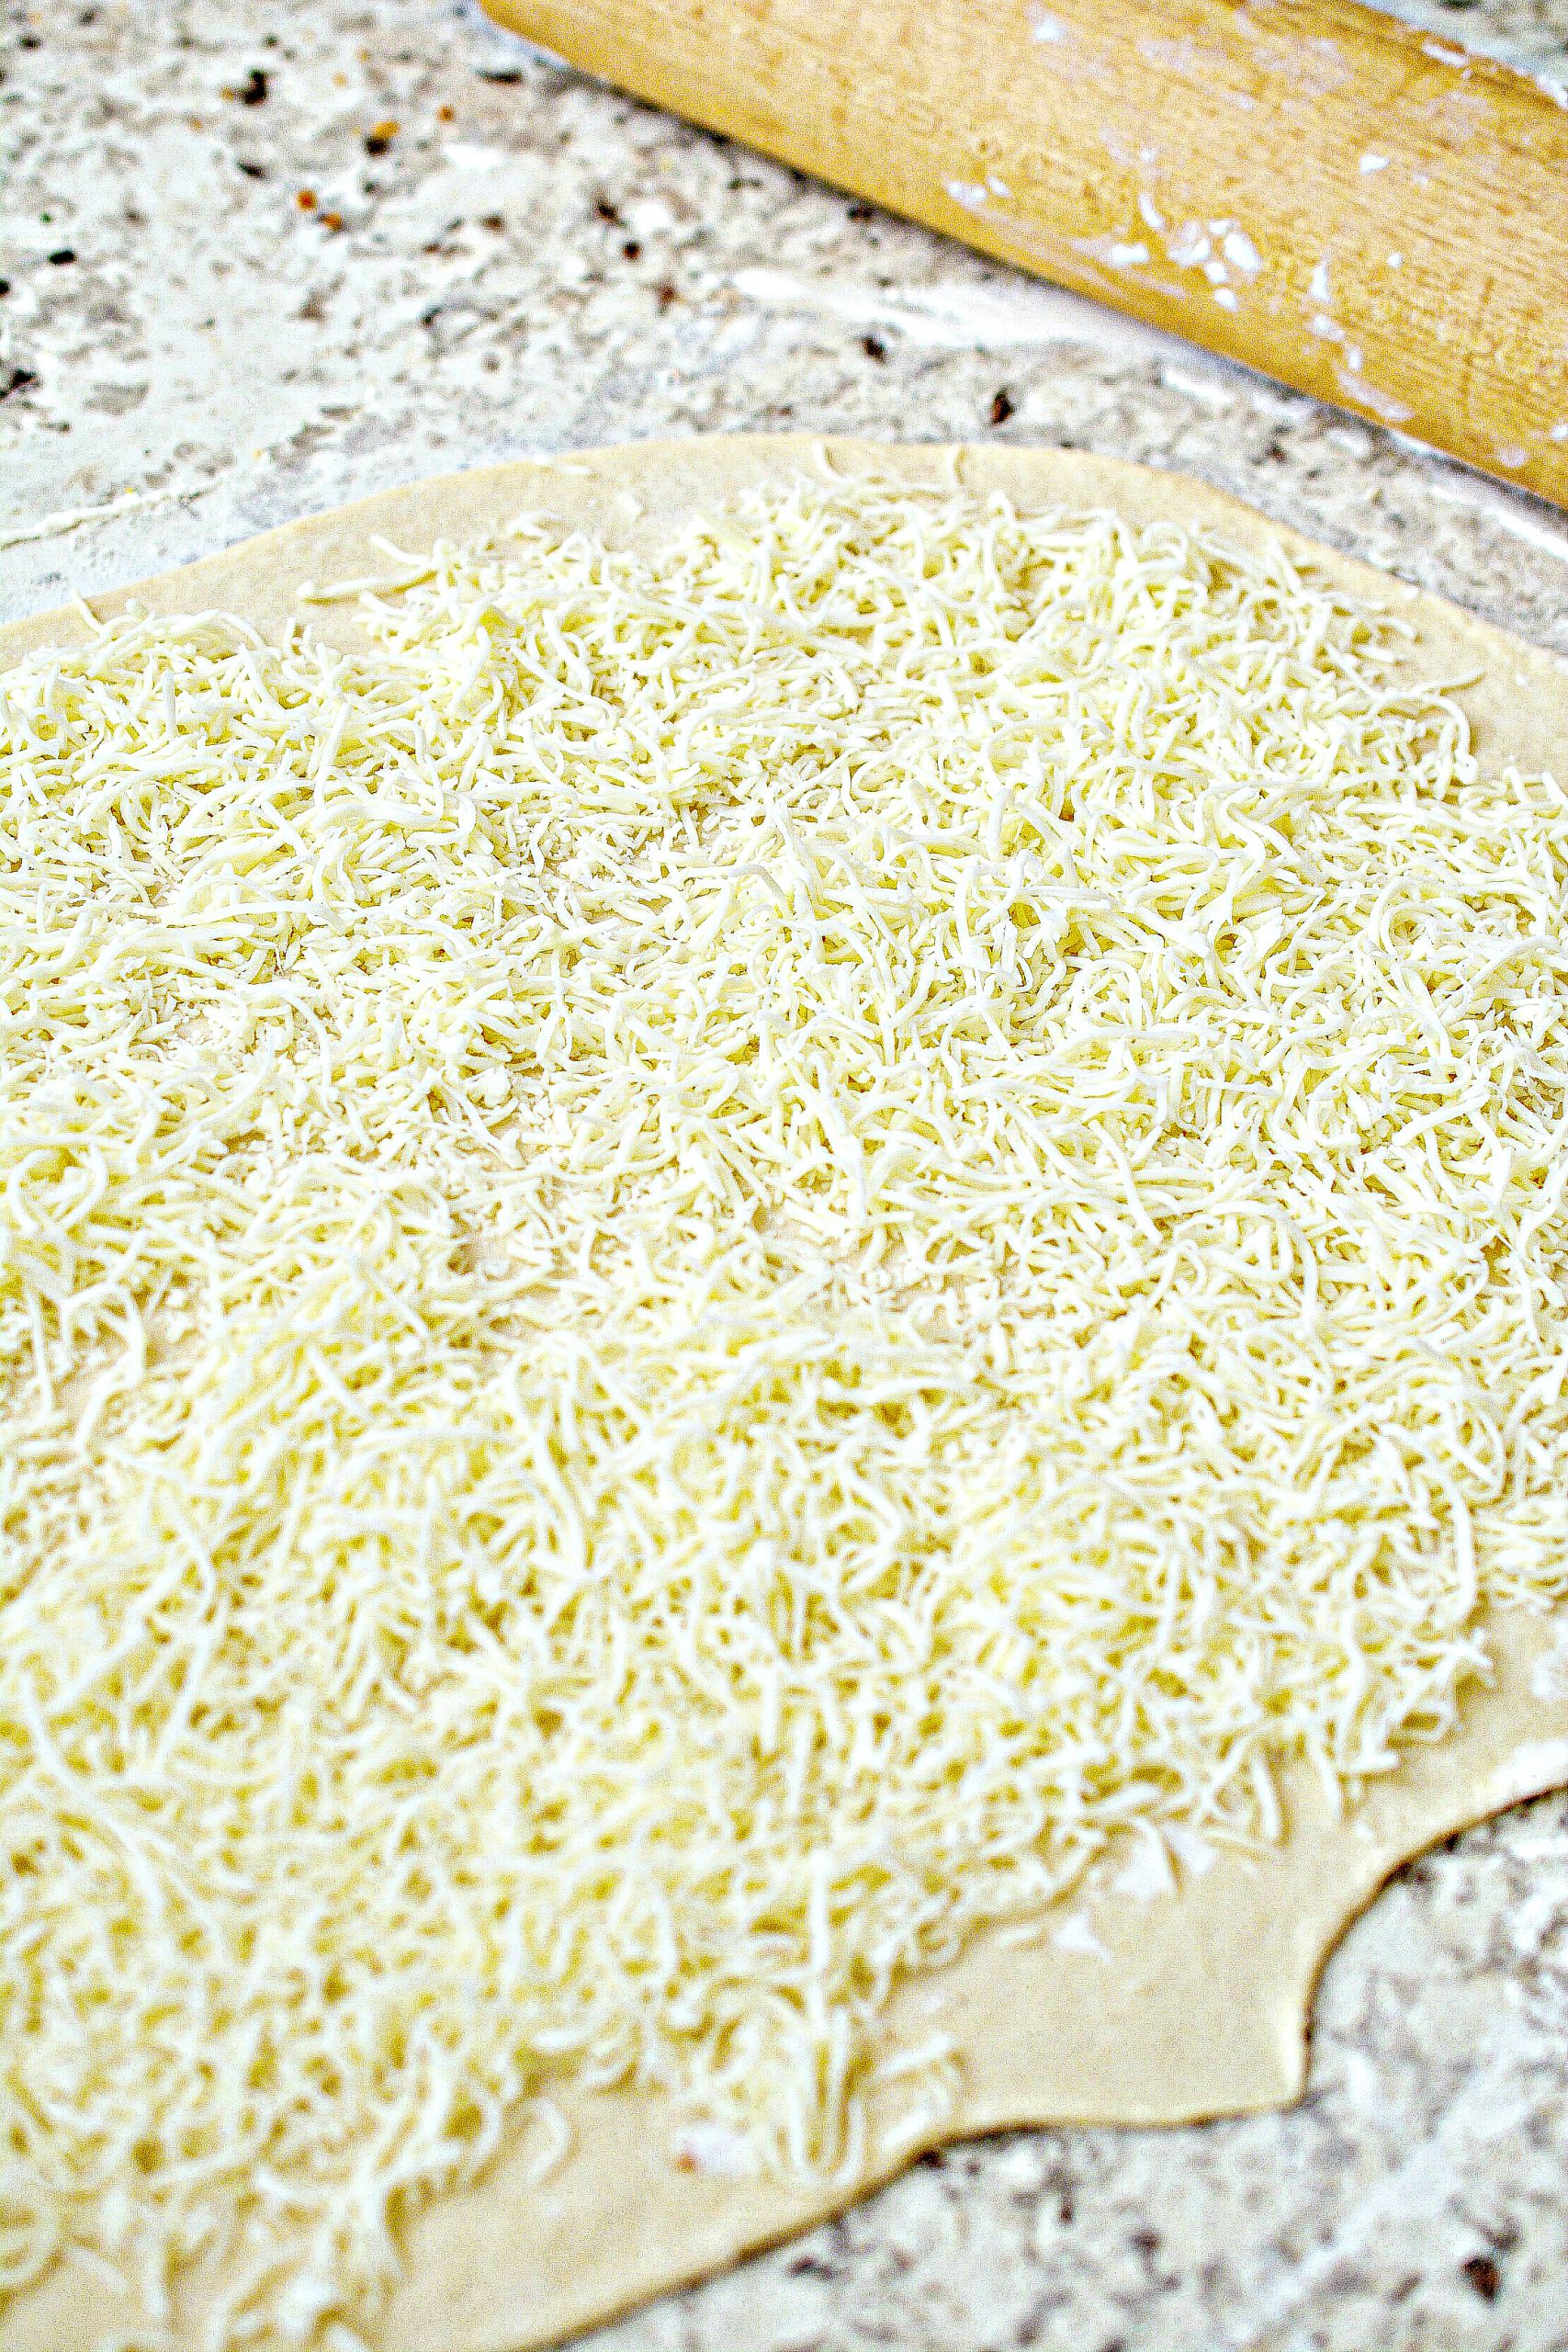 Sprinkle the mozzarella cheese on the dough.